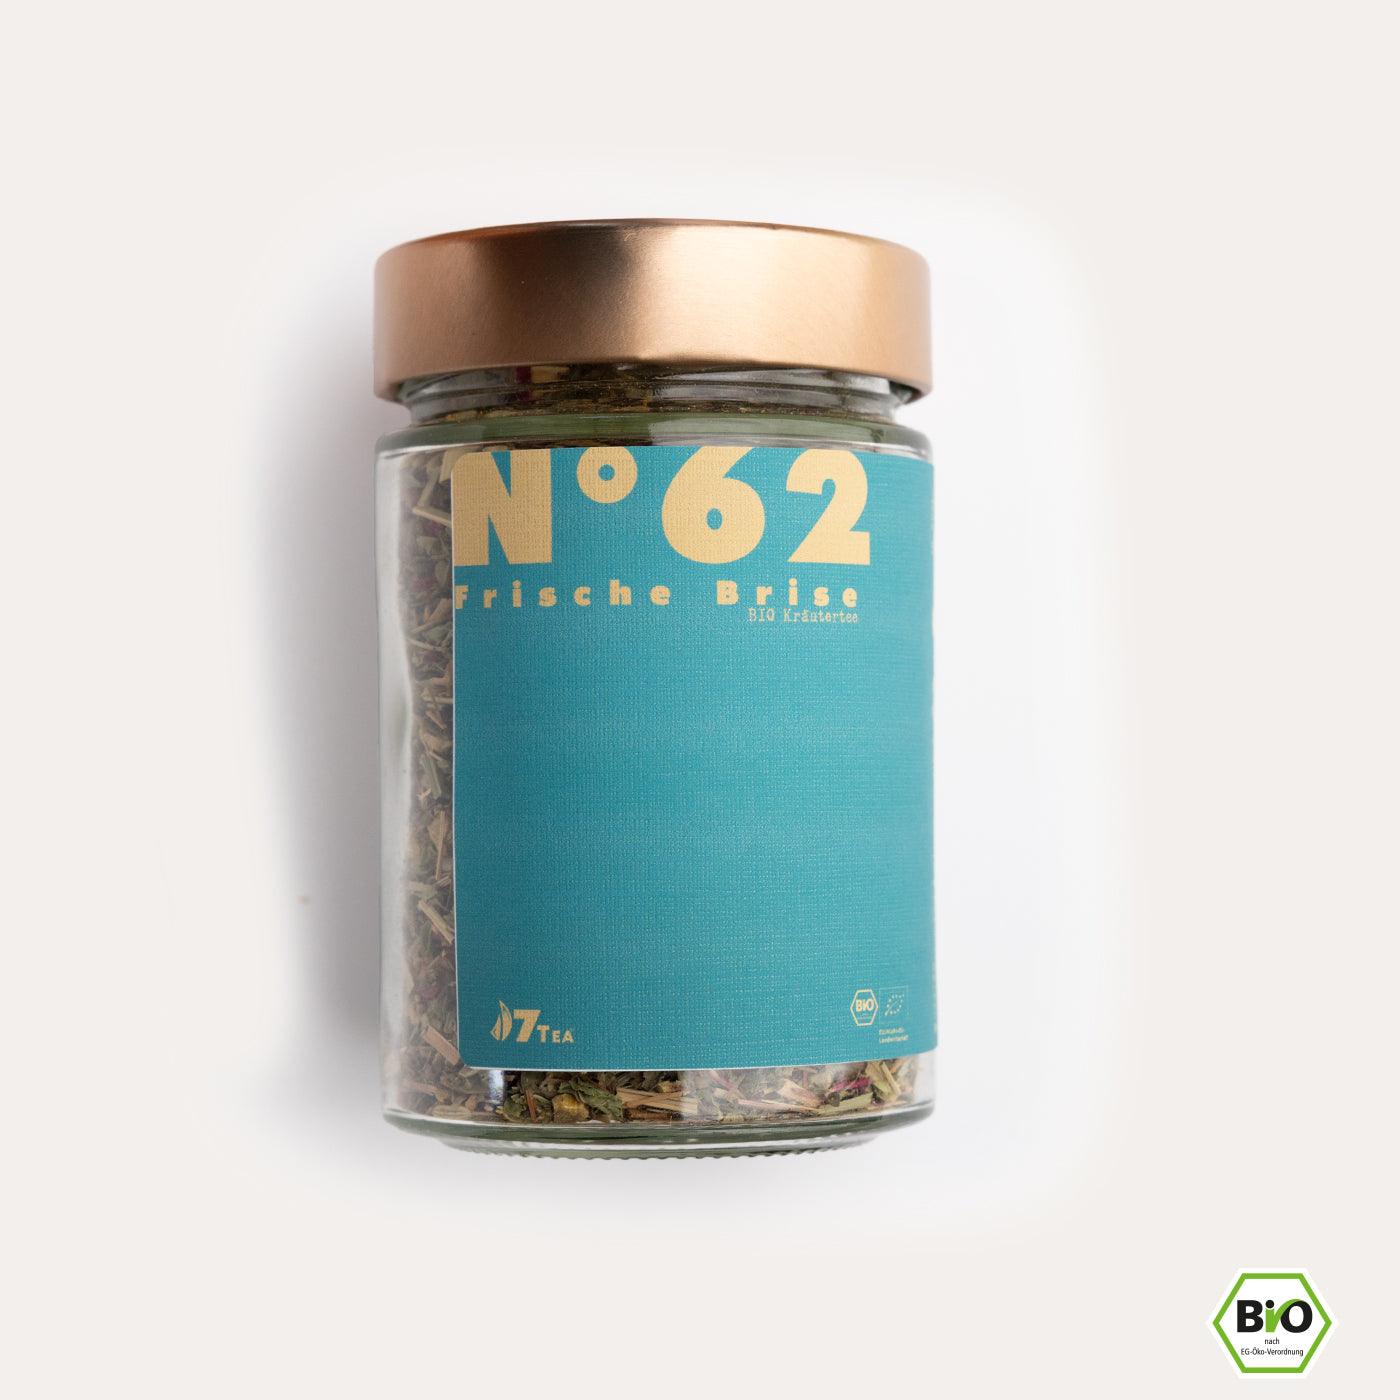 N°62 | Frische Brise - Lemongras, Ingwer & Zimt - 7Tea® Bio-Tee Onlineshop